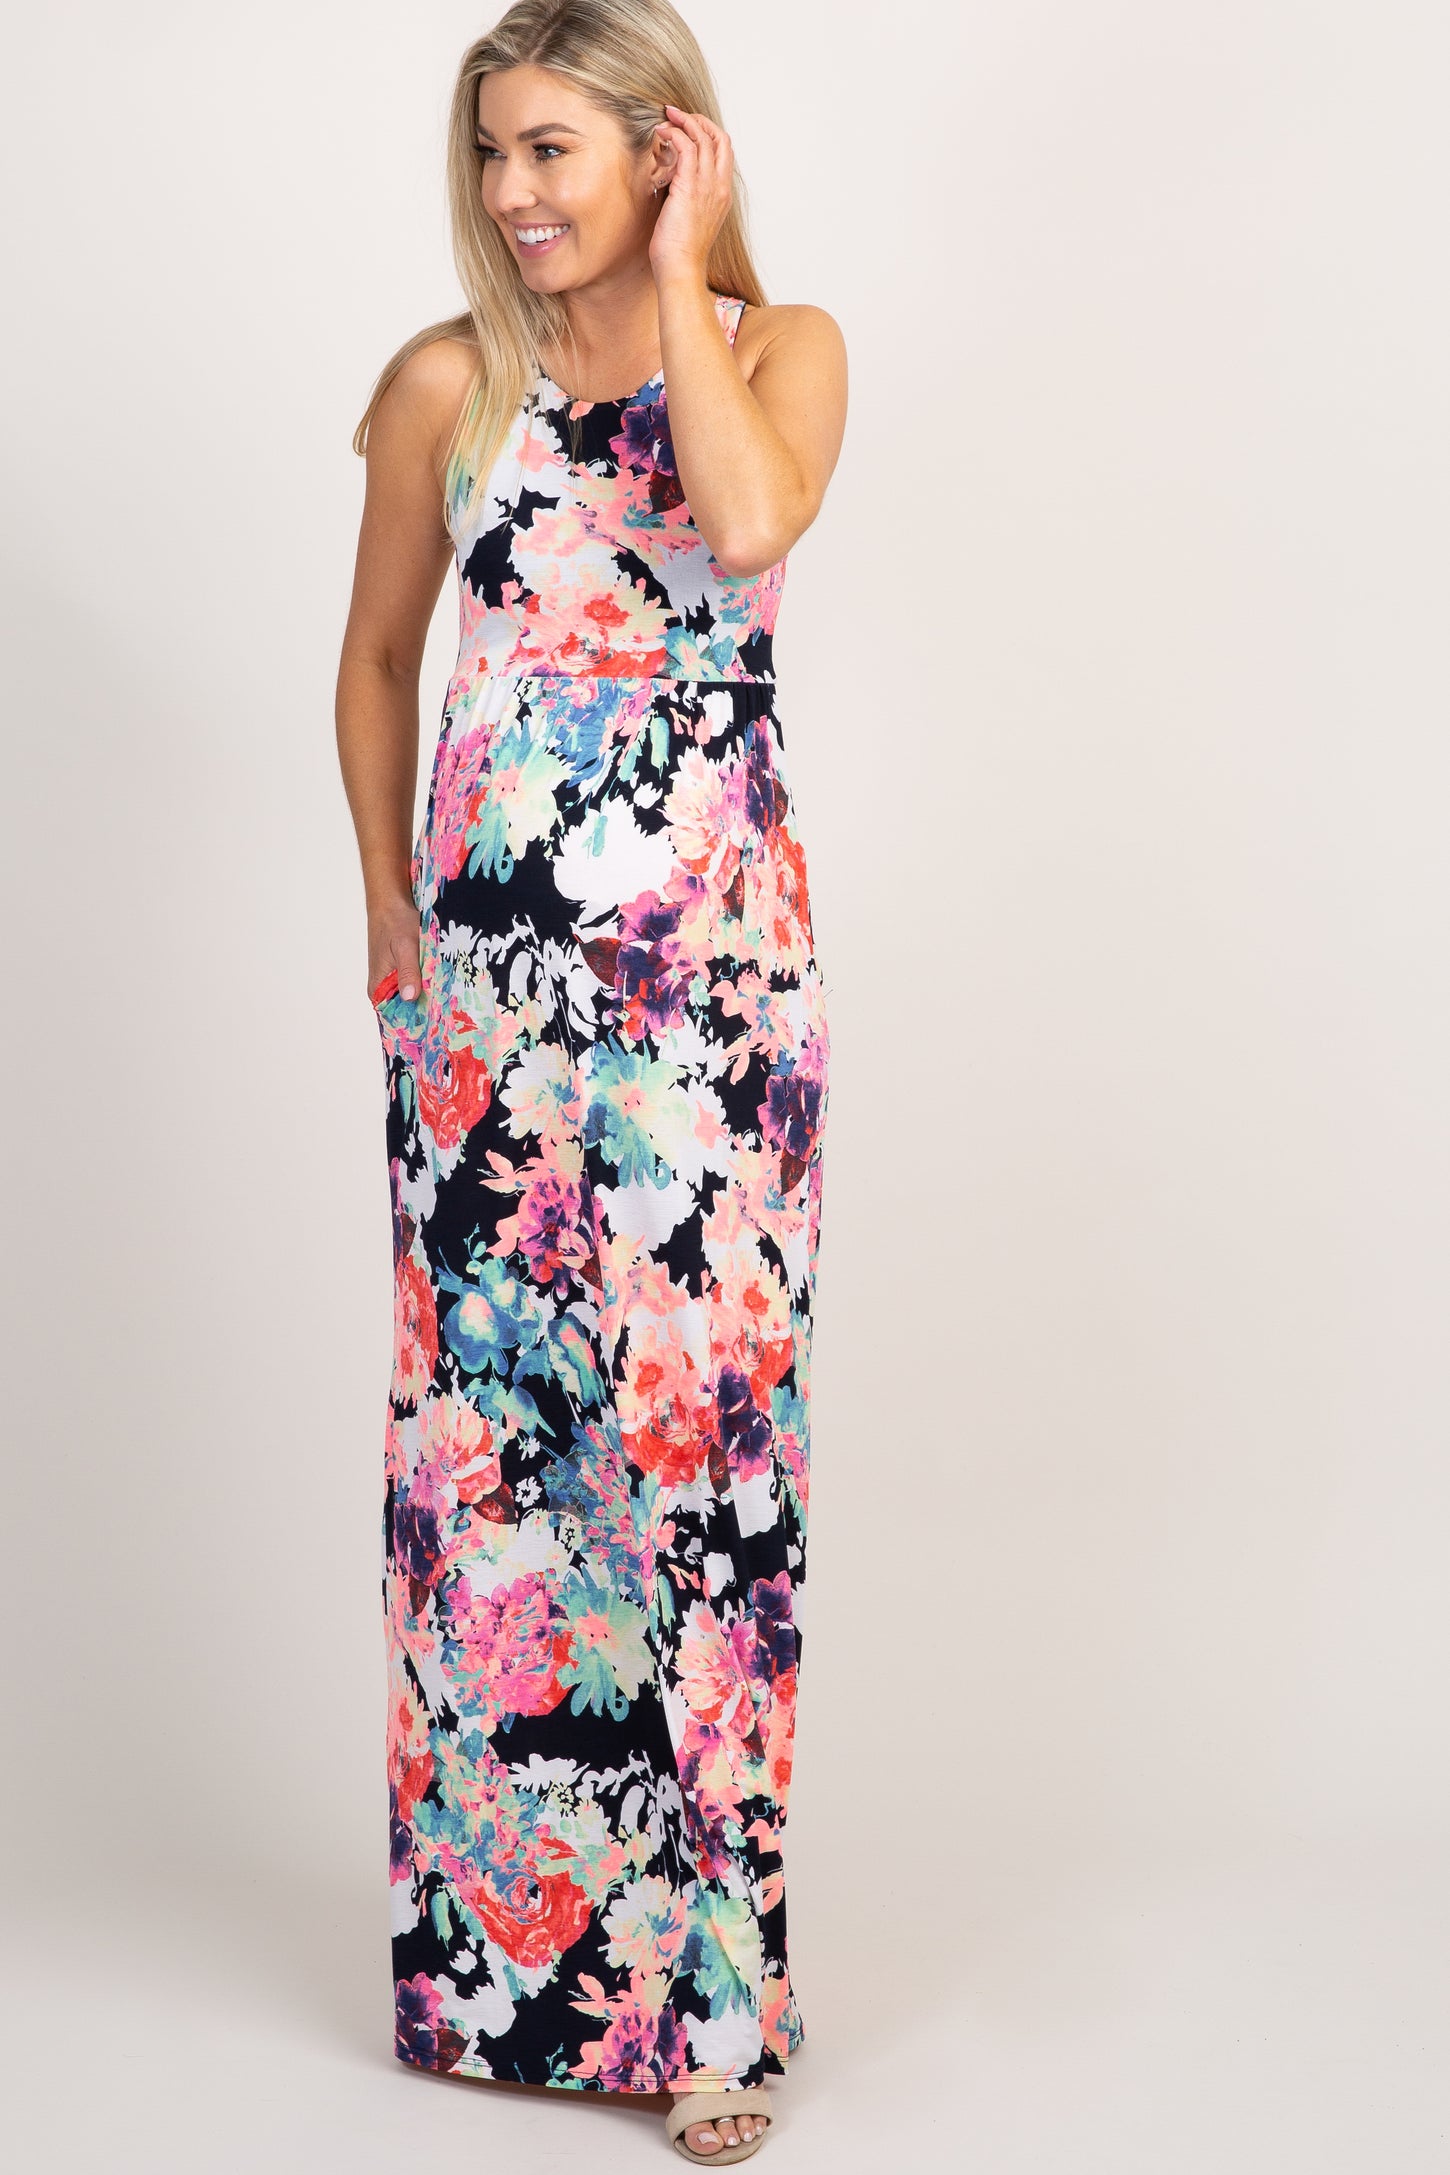 PinkBlush Navy Abstract Floral Sleeveless Maternity Maxi Dress